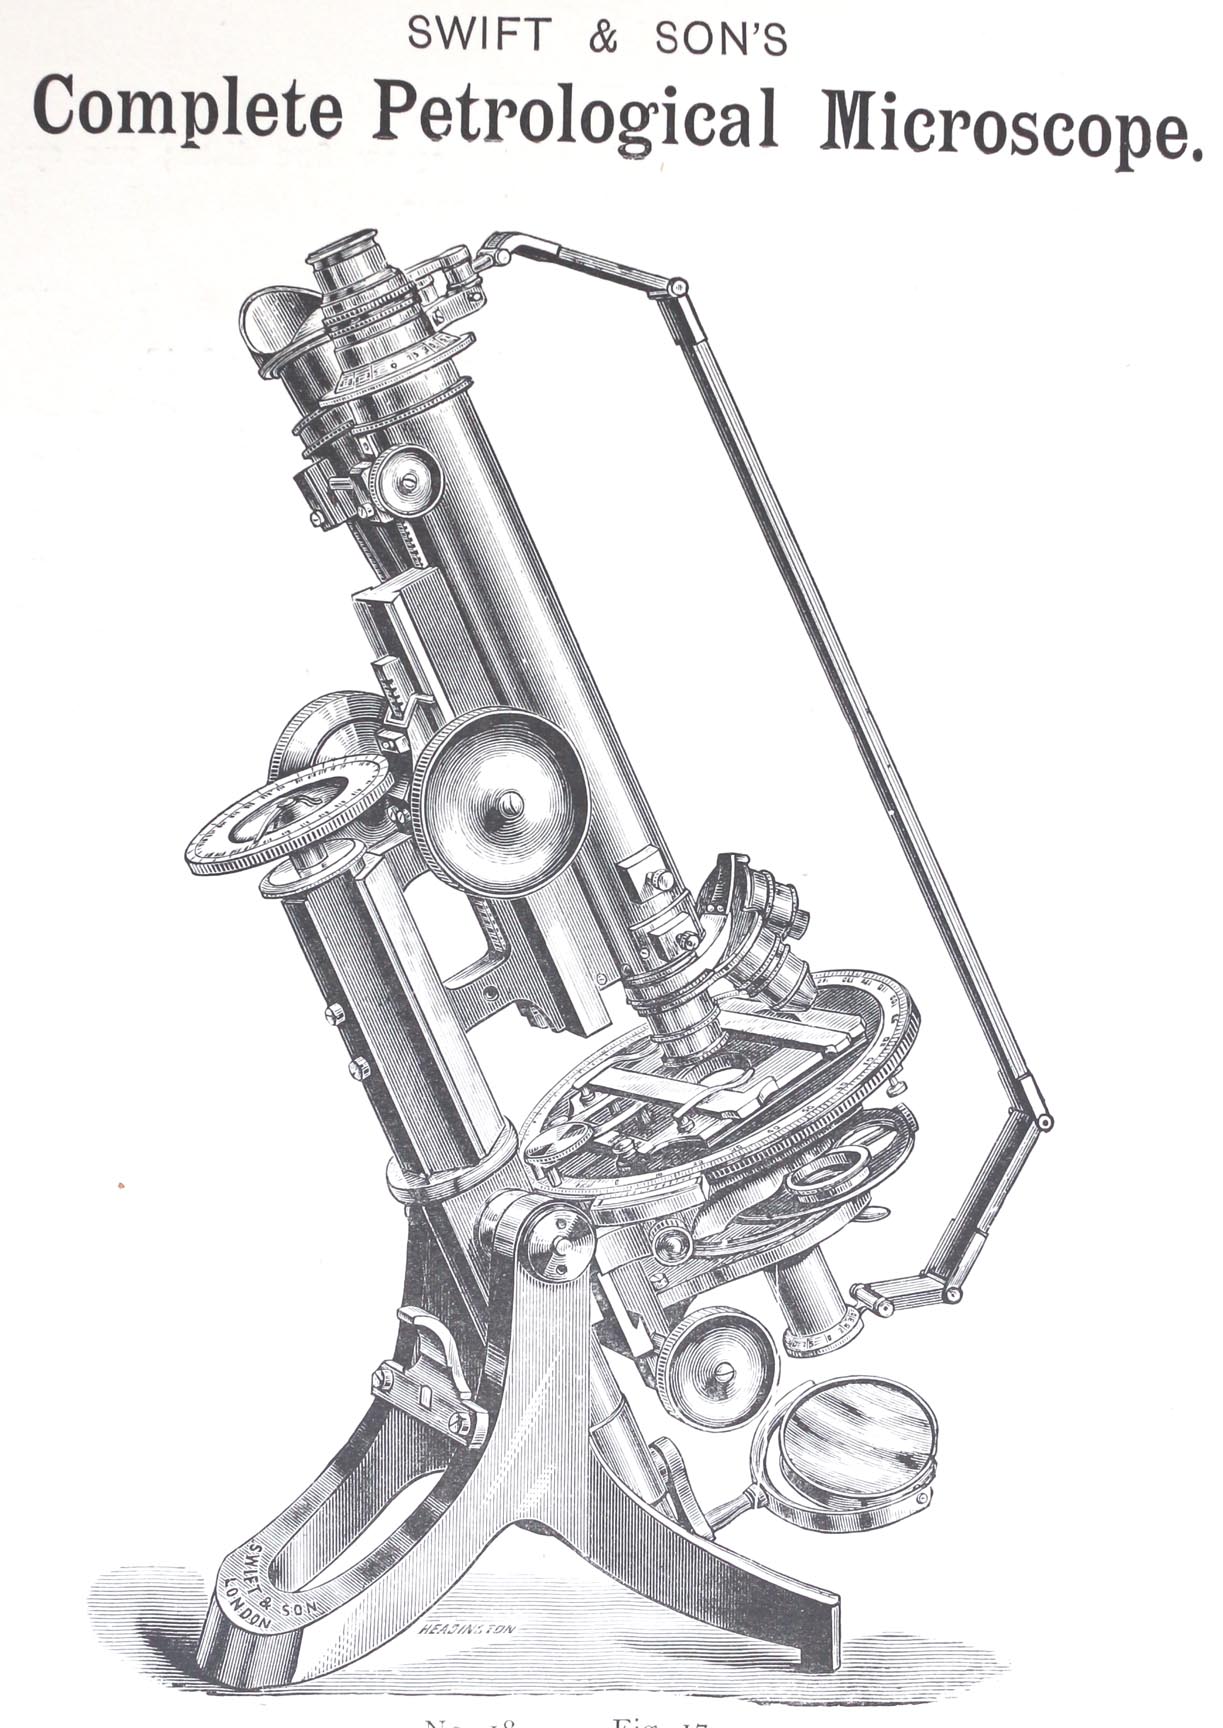 bar linkage microscope